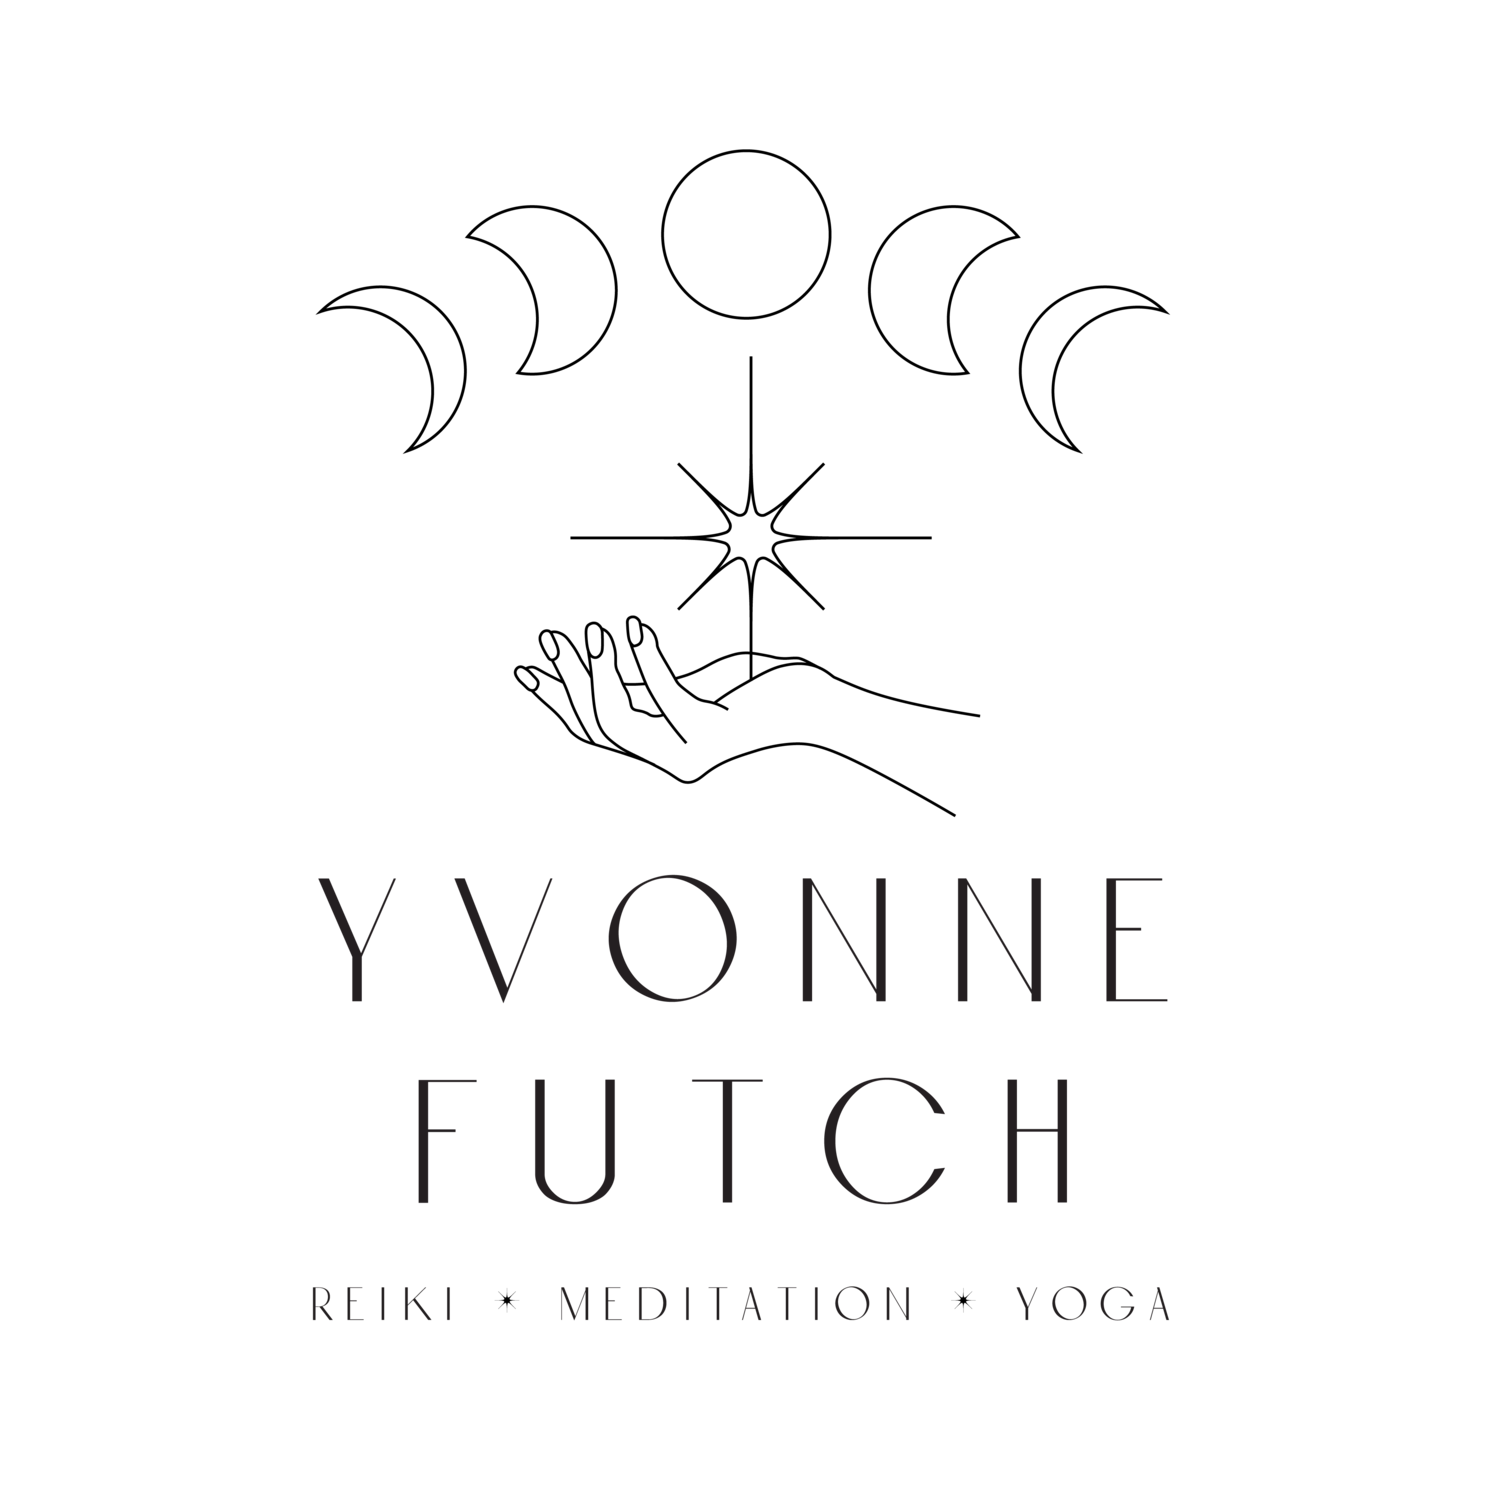 Yvonne Futch